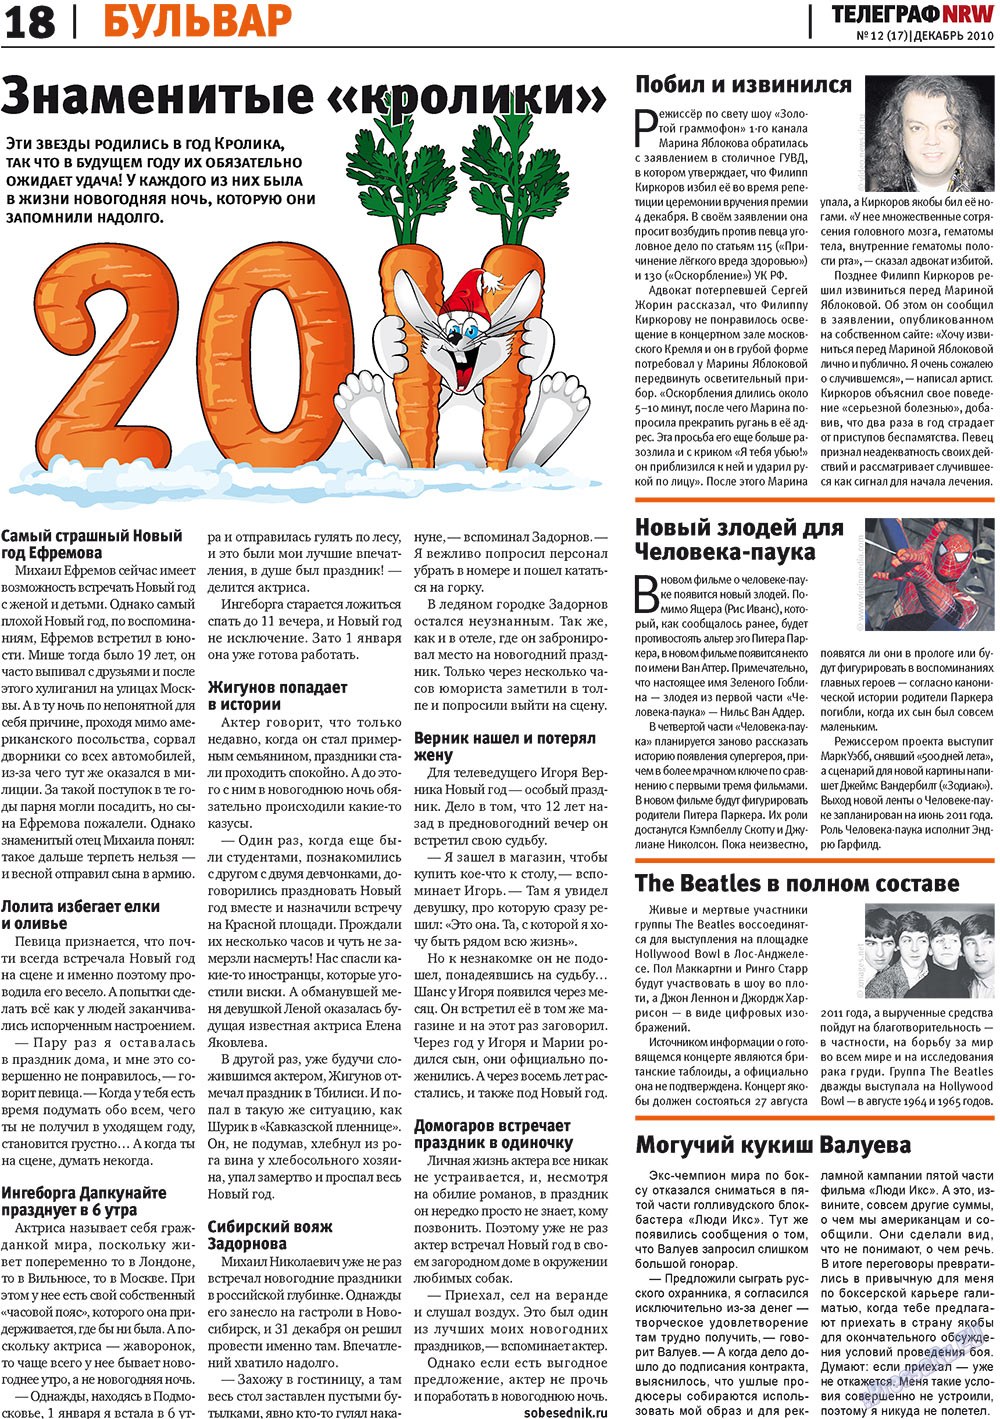 Телеграф NRW, газета. 2010 №12 стр.18